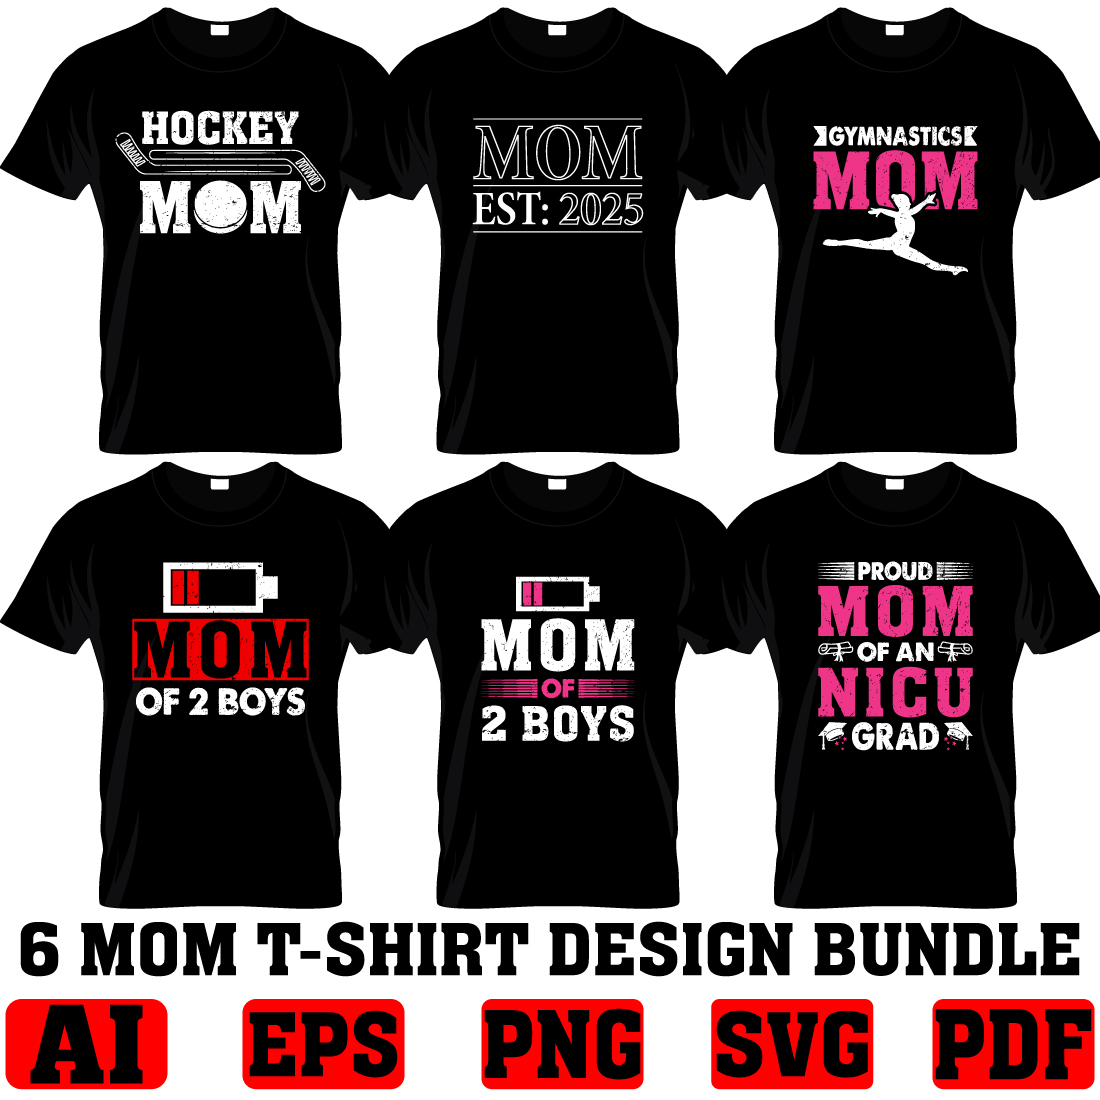 mom t-shirt design bundle cover image.